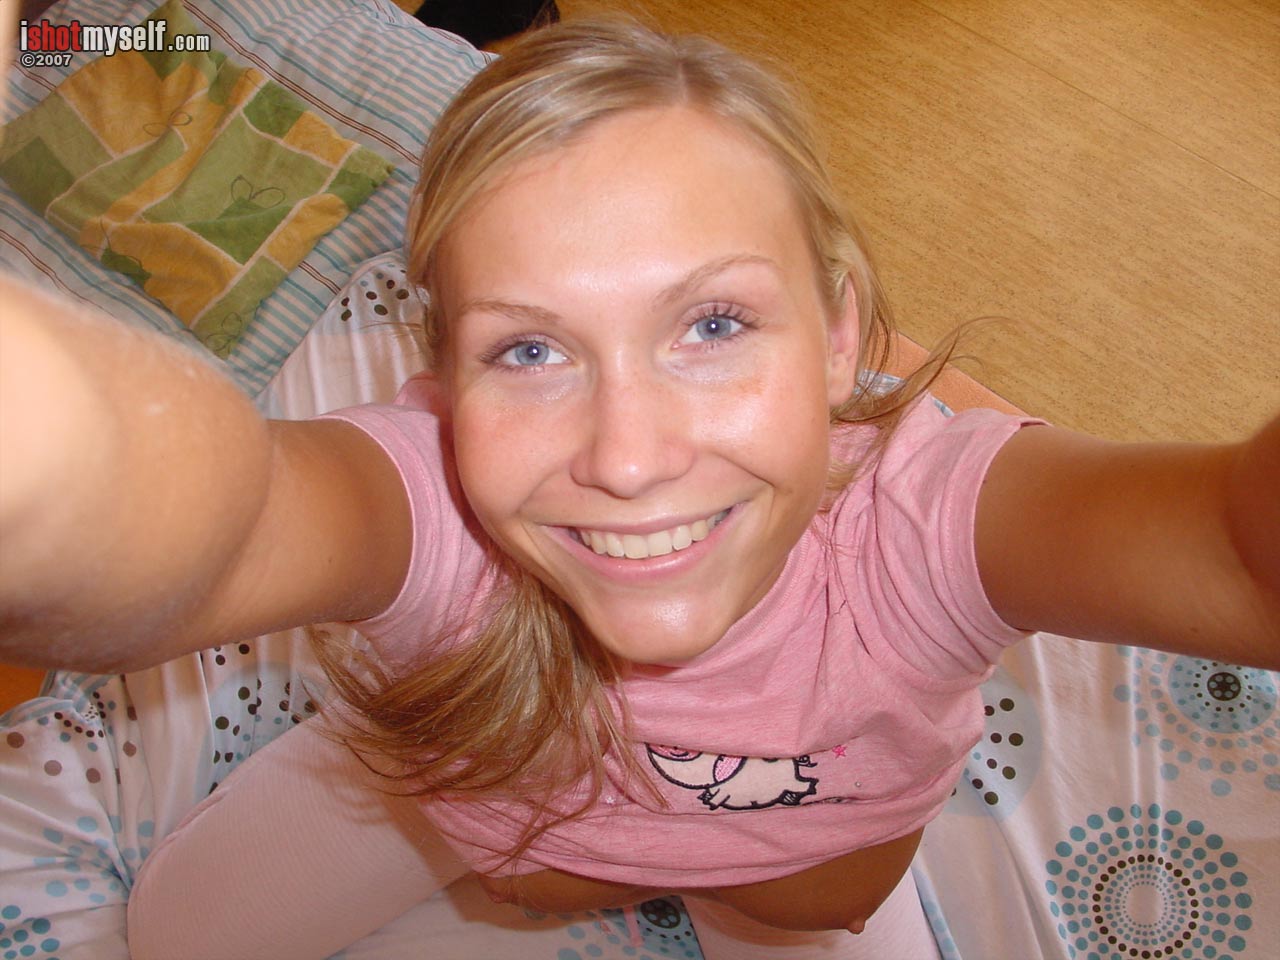 fiala-nude-blonde-taned-pussy-selfie-ishotmyself-08